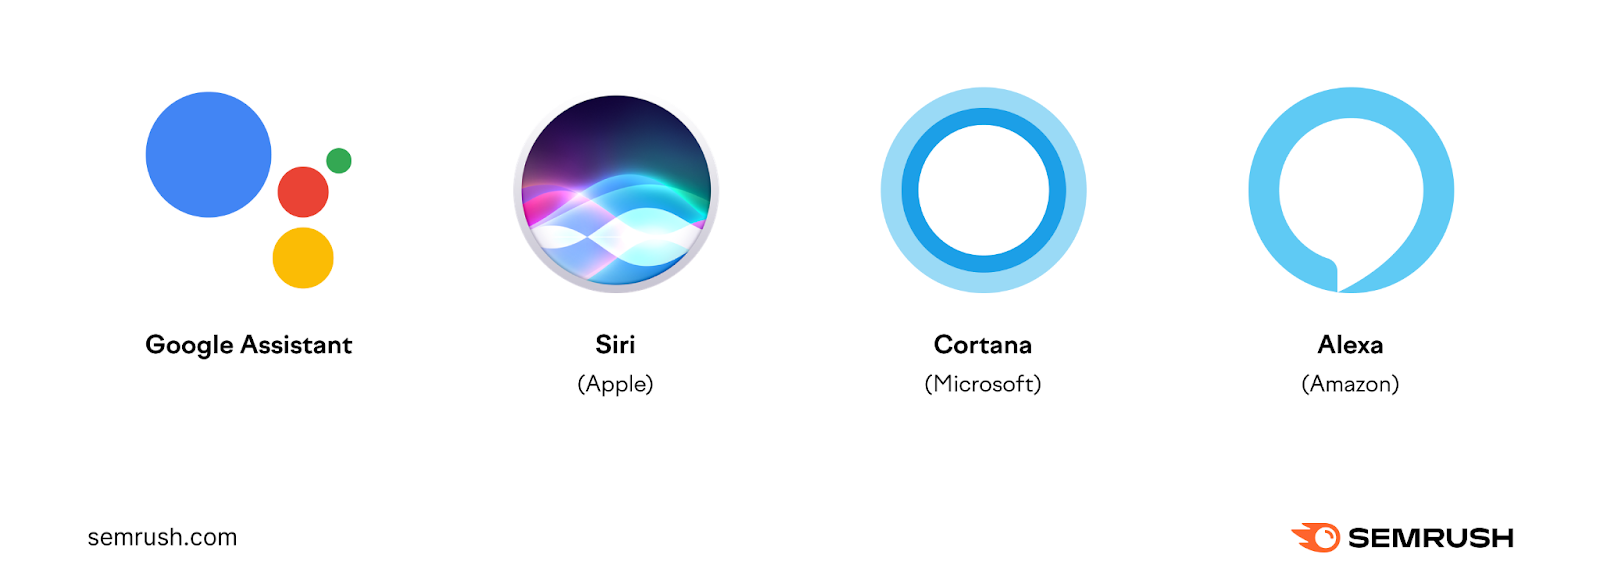 an infographic with Google Assistant, Apple’s Siri, Microsoft’s Cortana, and Amazon’s Alexa